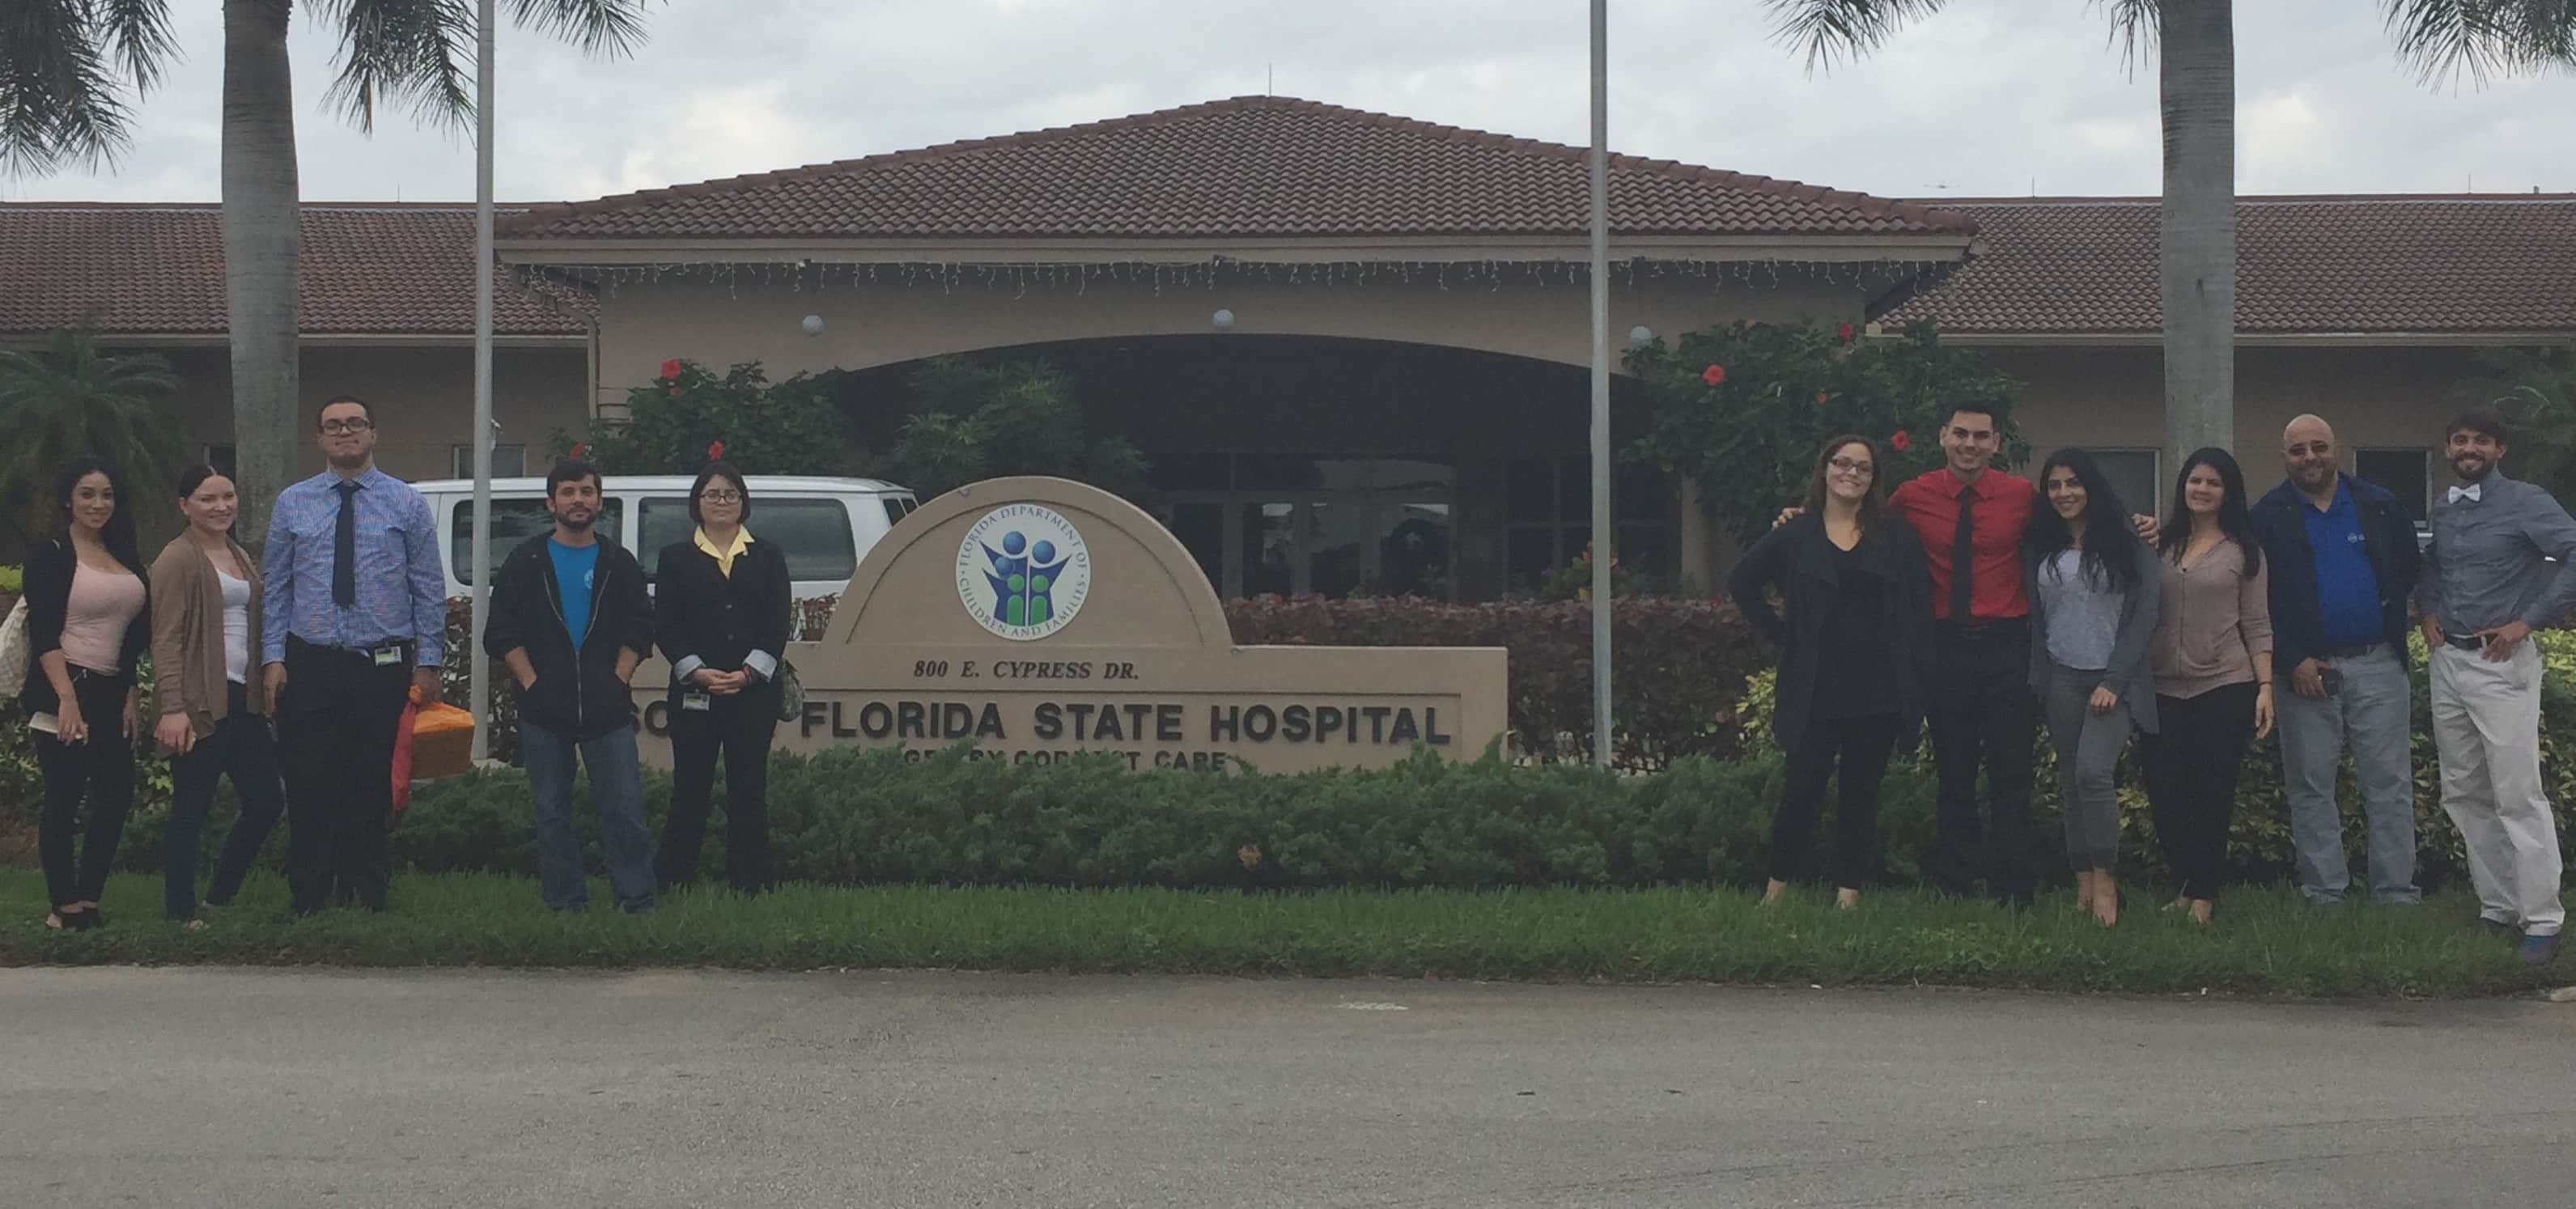 Miami Psychology Students Visit a Psychiatric Hospital